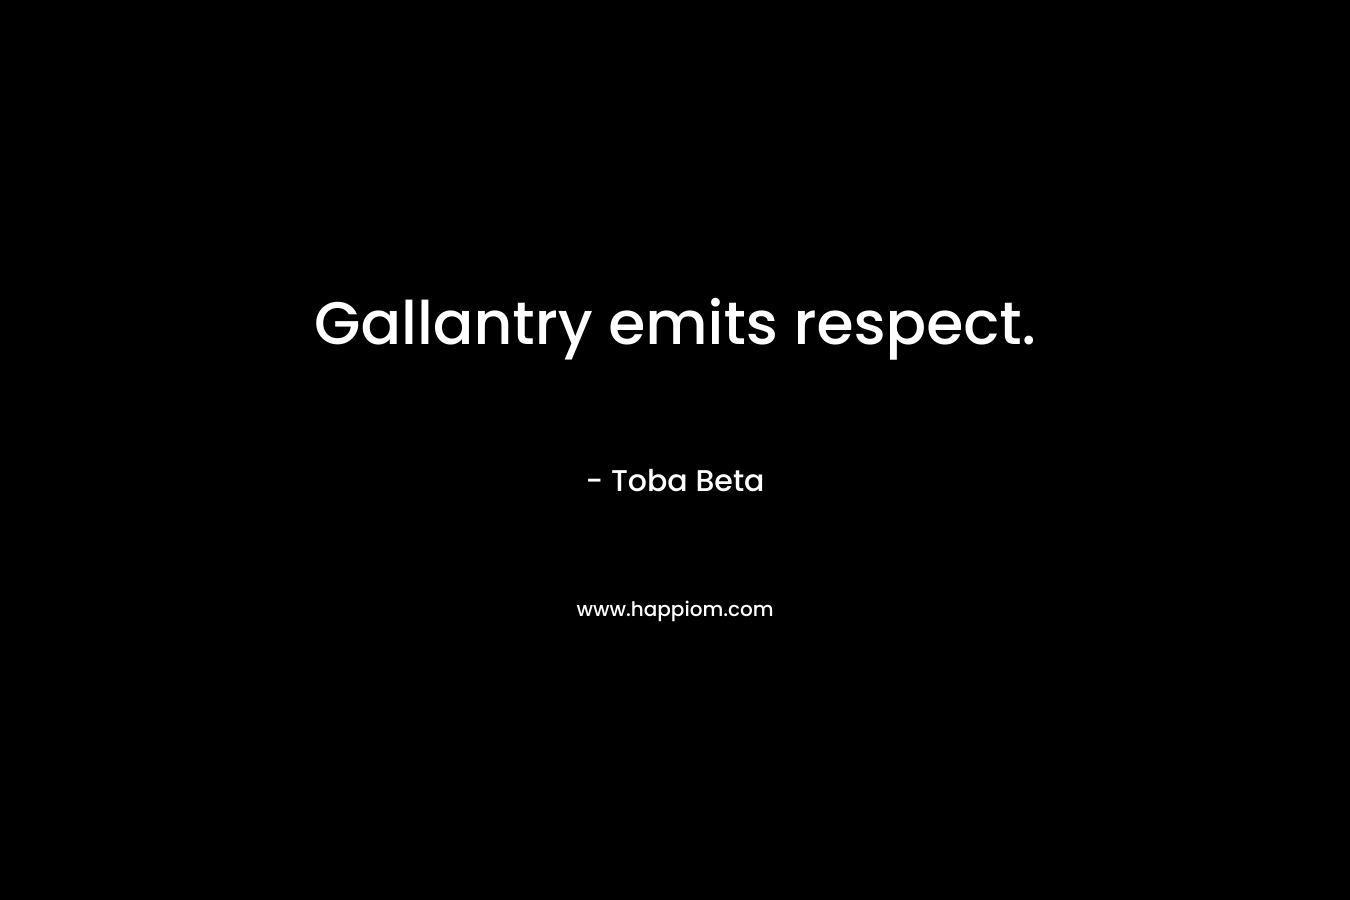 Gallantry emits respect.